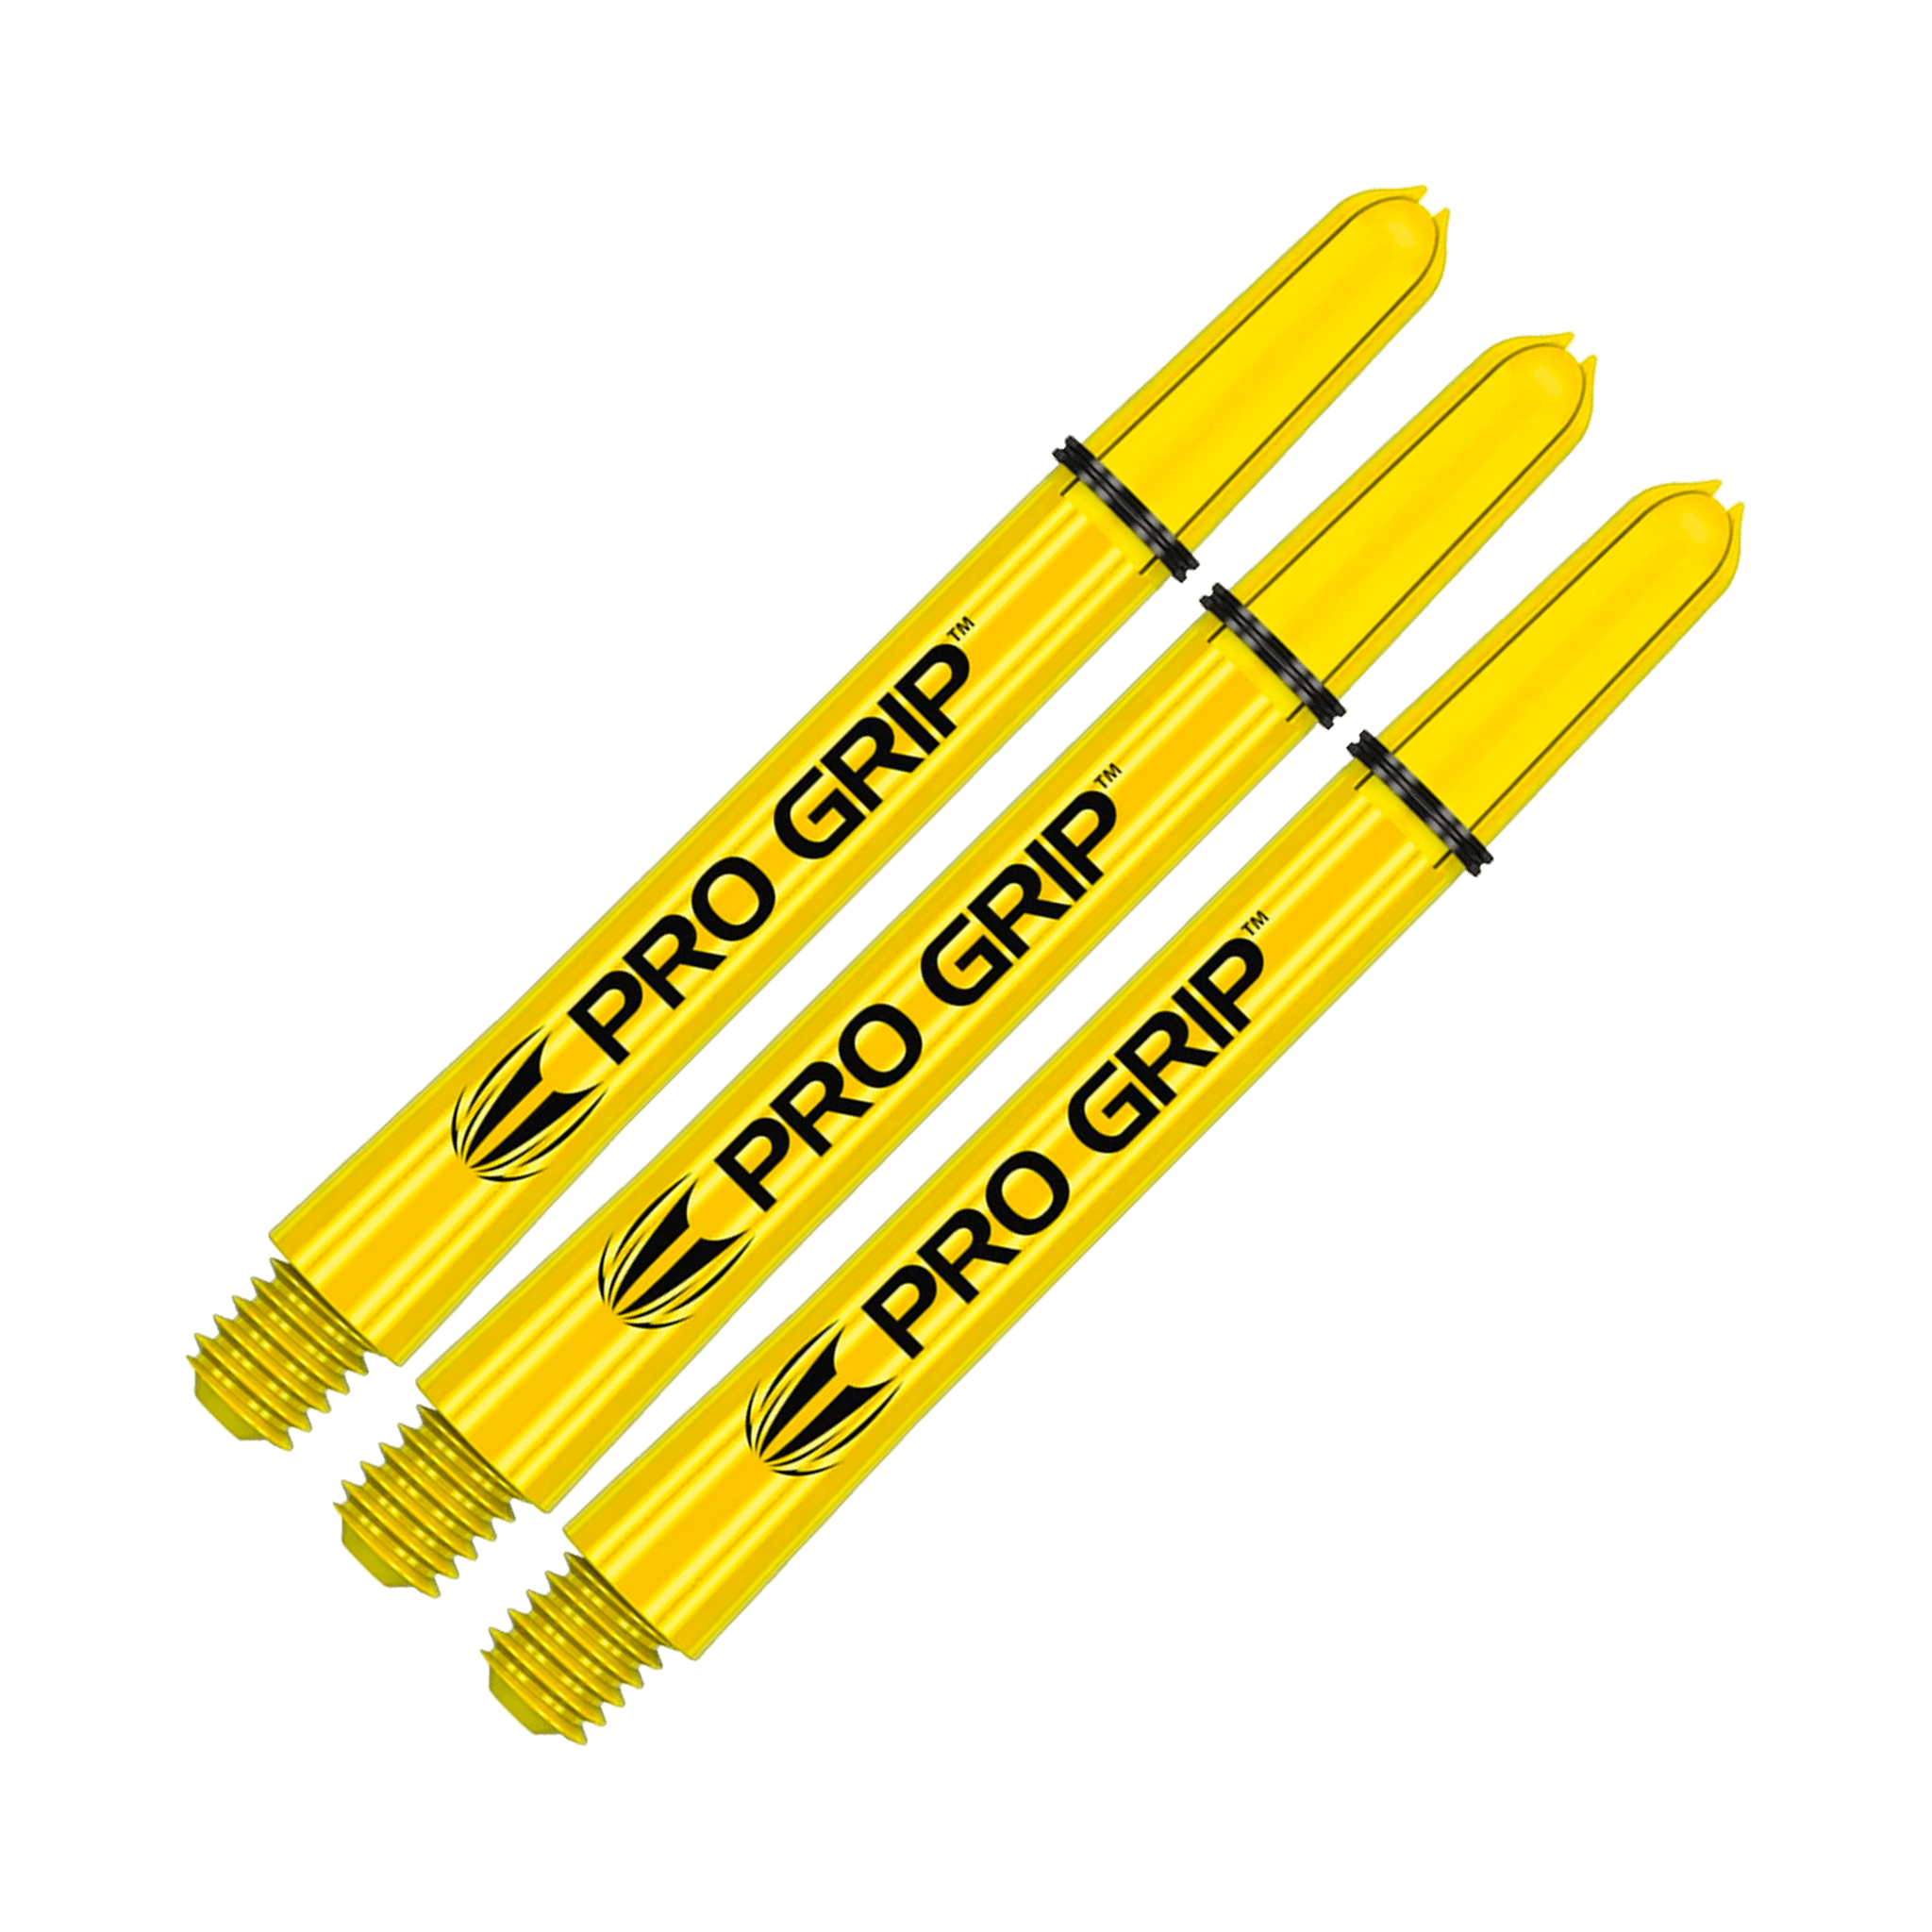 Target Pro Grip Multi Pack - Nylon Dart Shafts (3 Sets) Yellow / Medium (48mm) Shafts